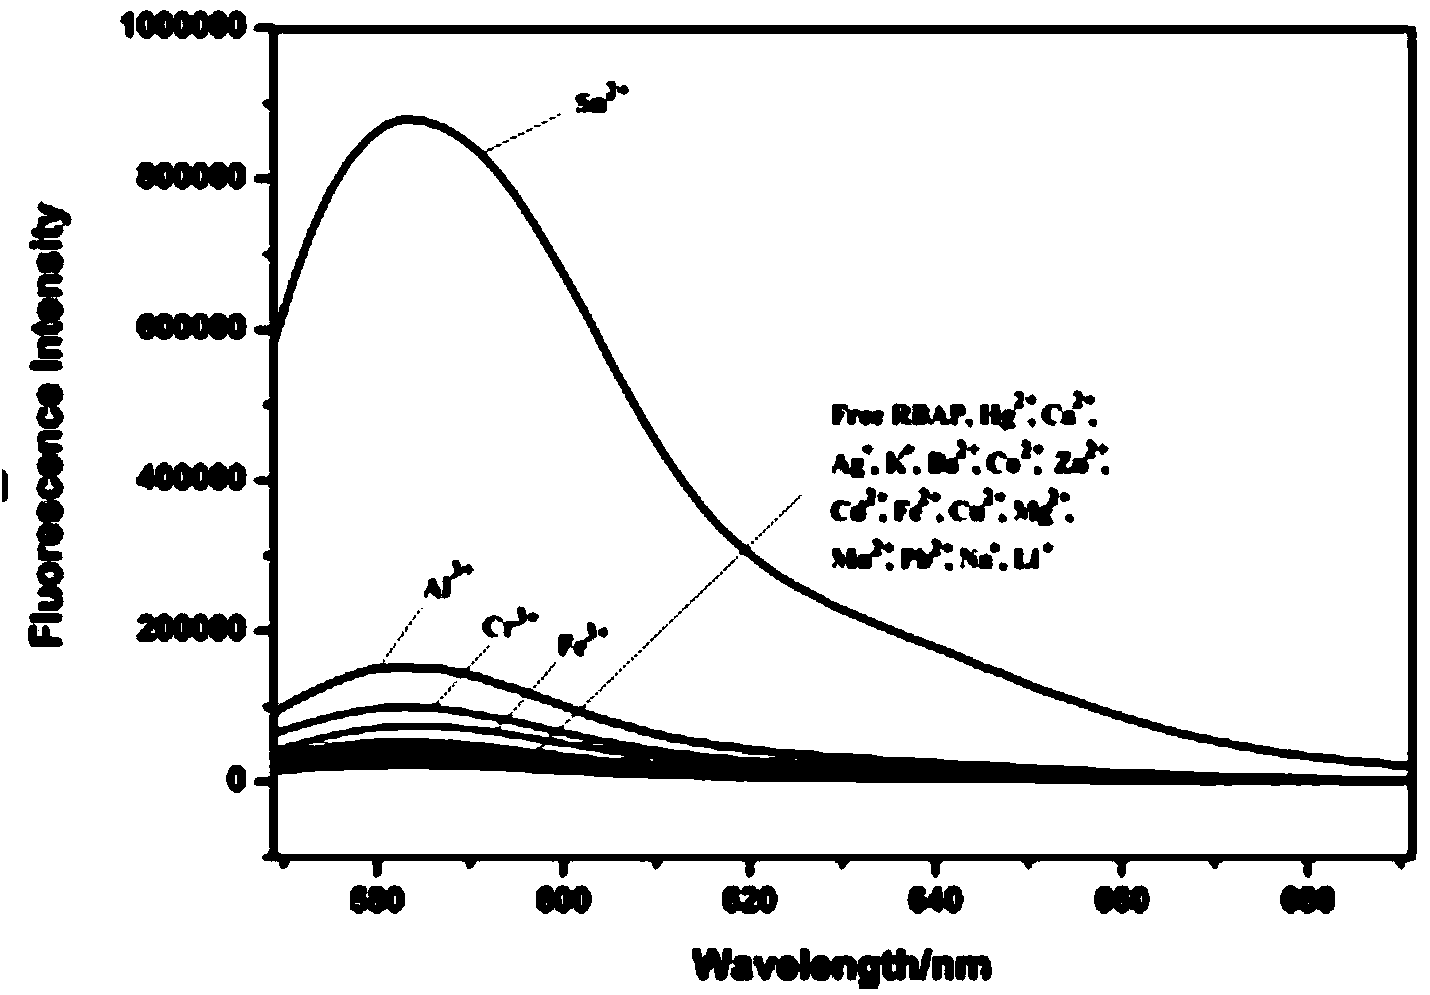 Application of rhodamine B-based fluorescence sensor